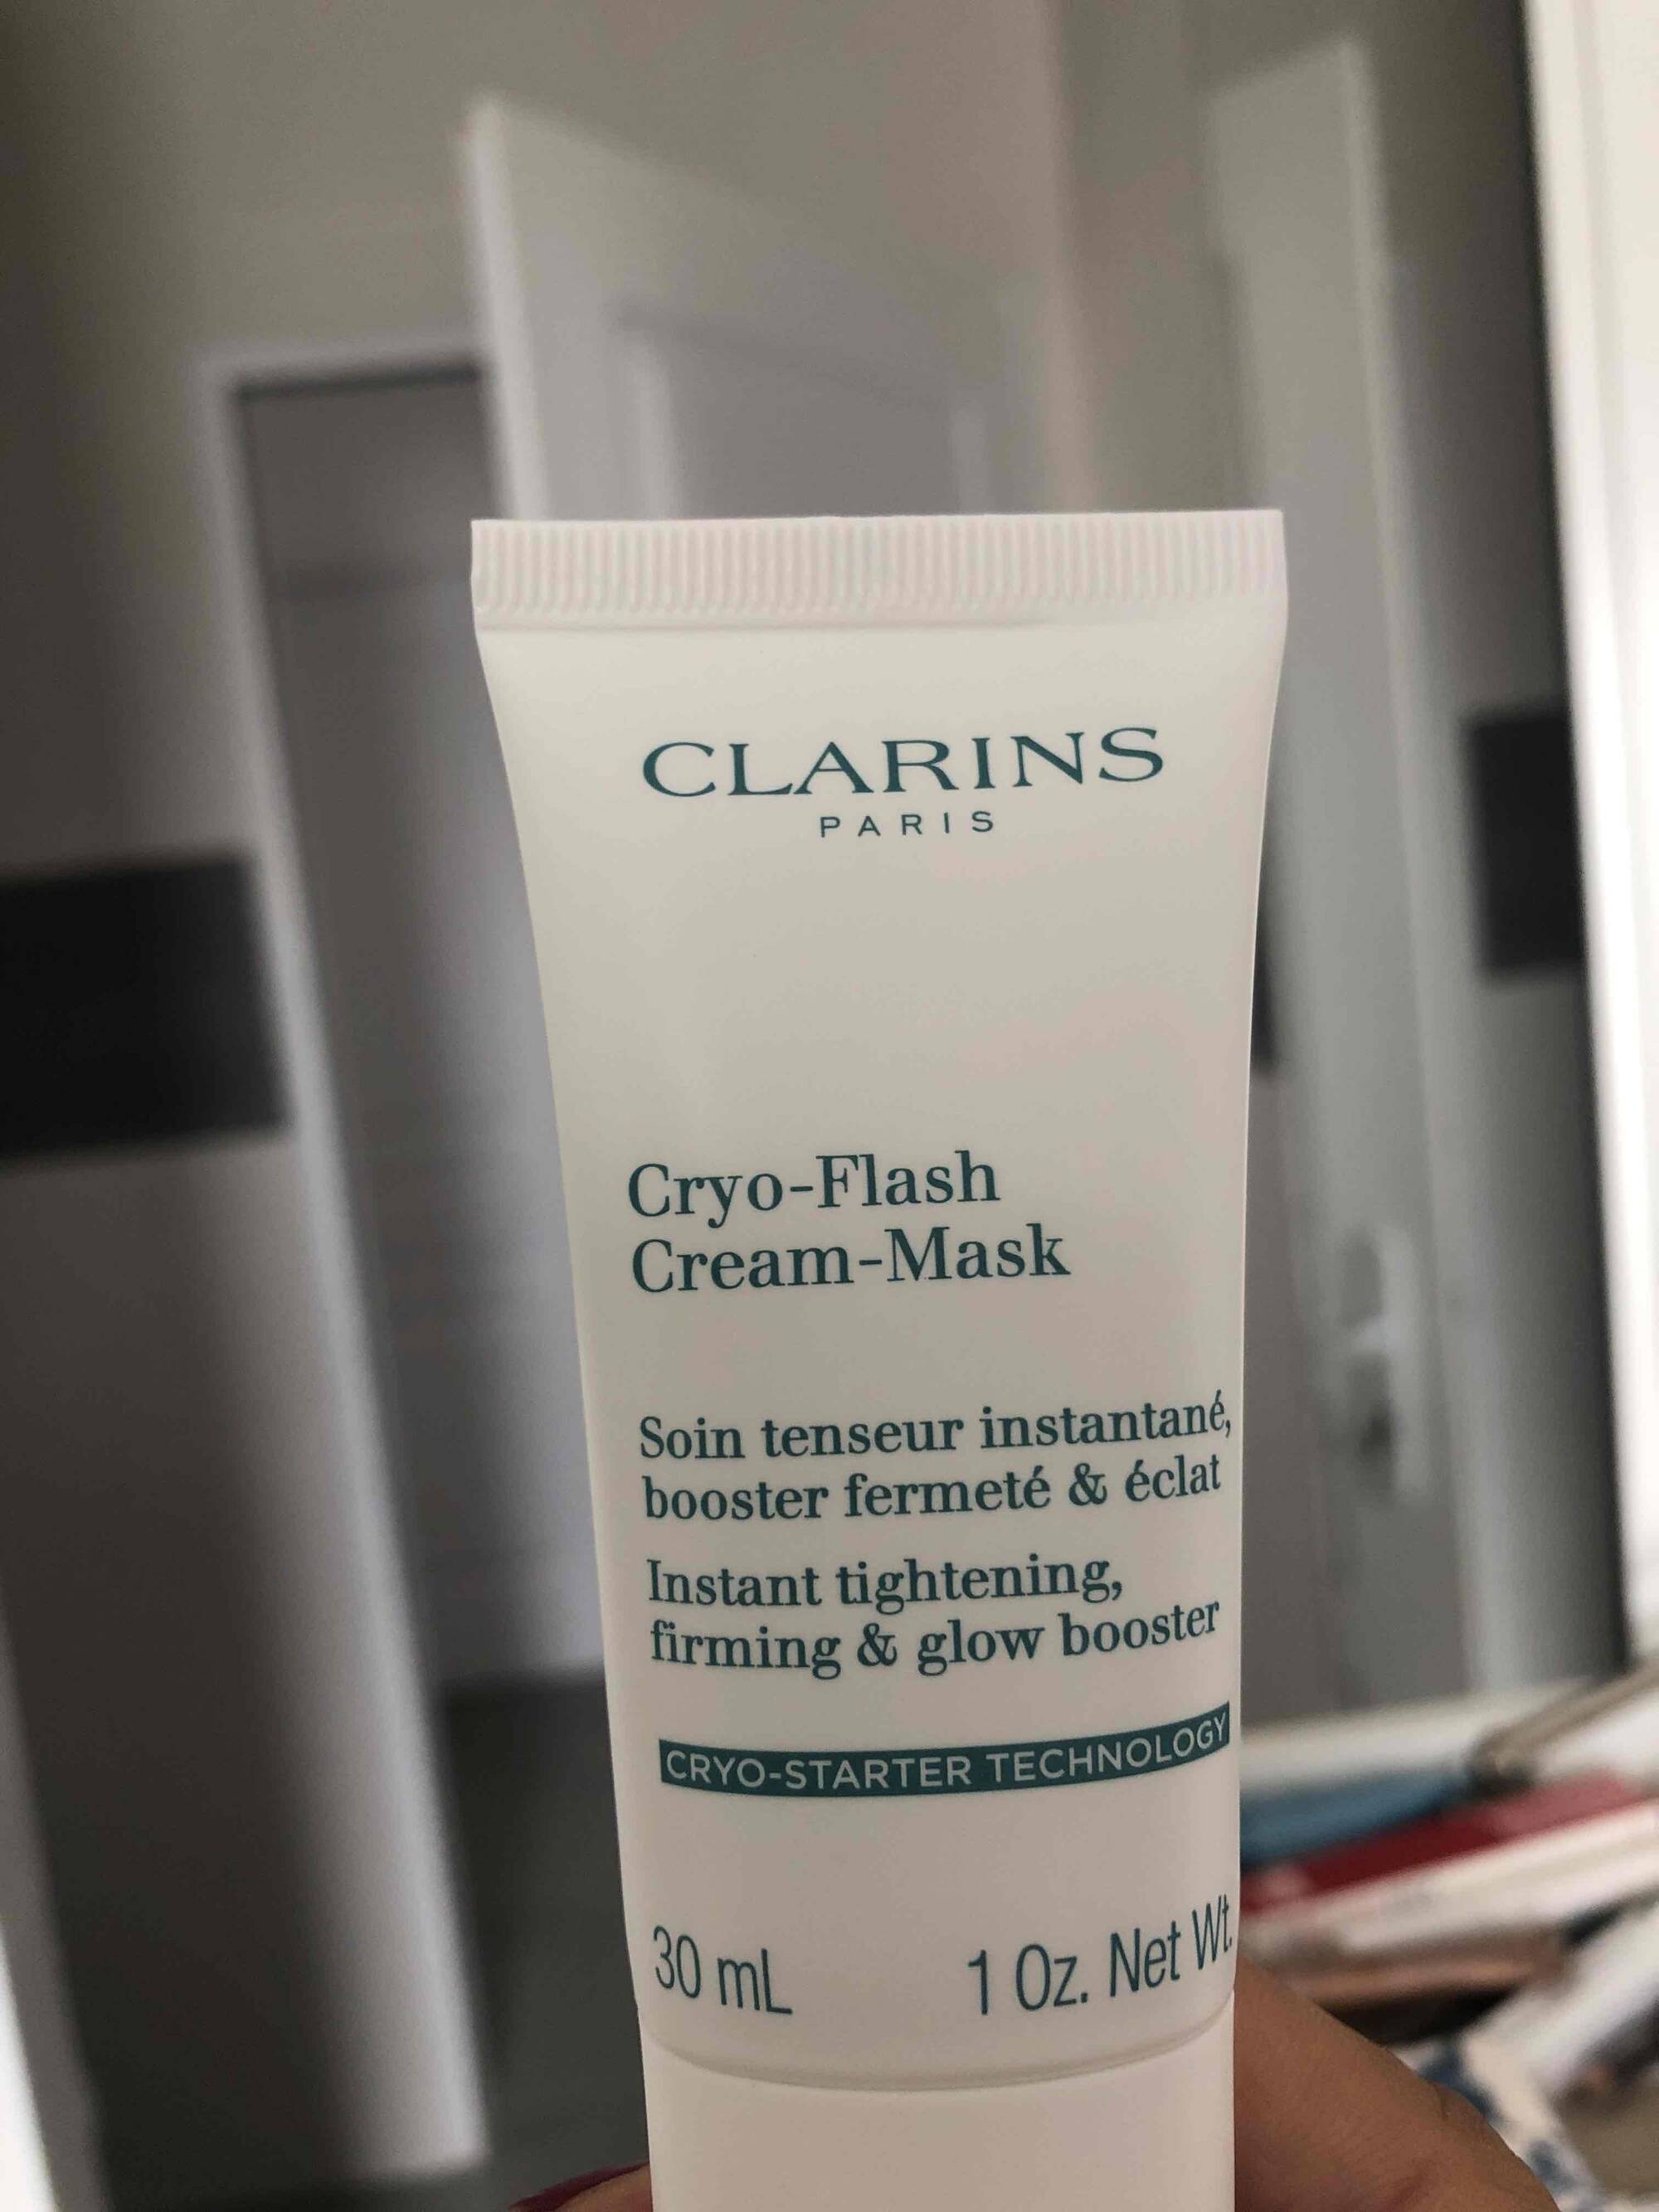 CLARINS PARIS - Cryo-flash cream mask